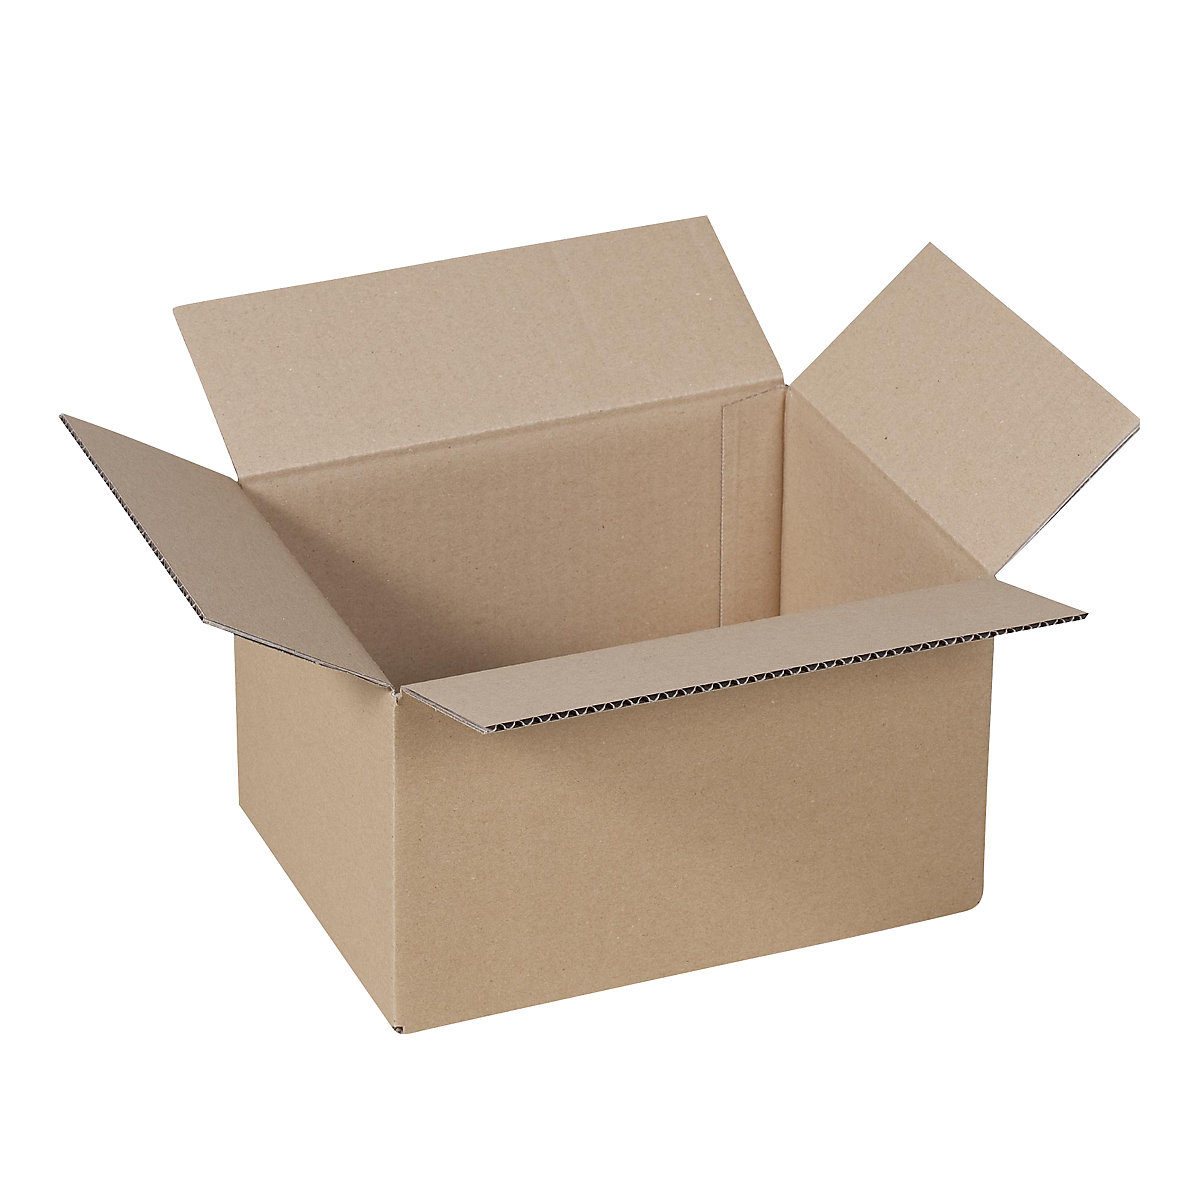 Folding cardboard box, FEFCO 0201, made of single fluted cardboard, internal dimensions 200 x 140 x 120 mm, pack of 50-18